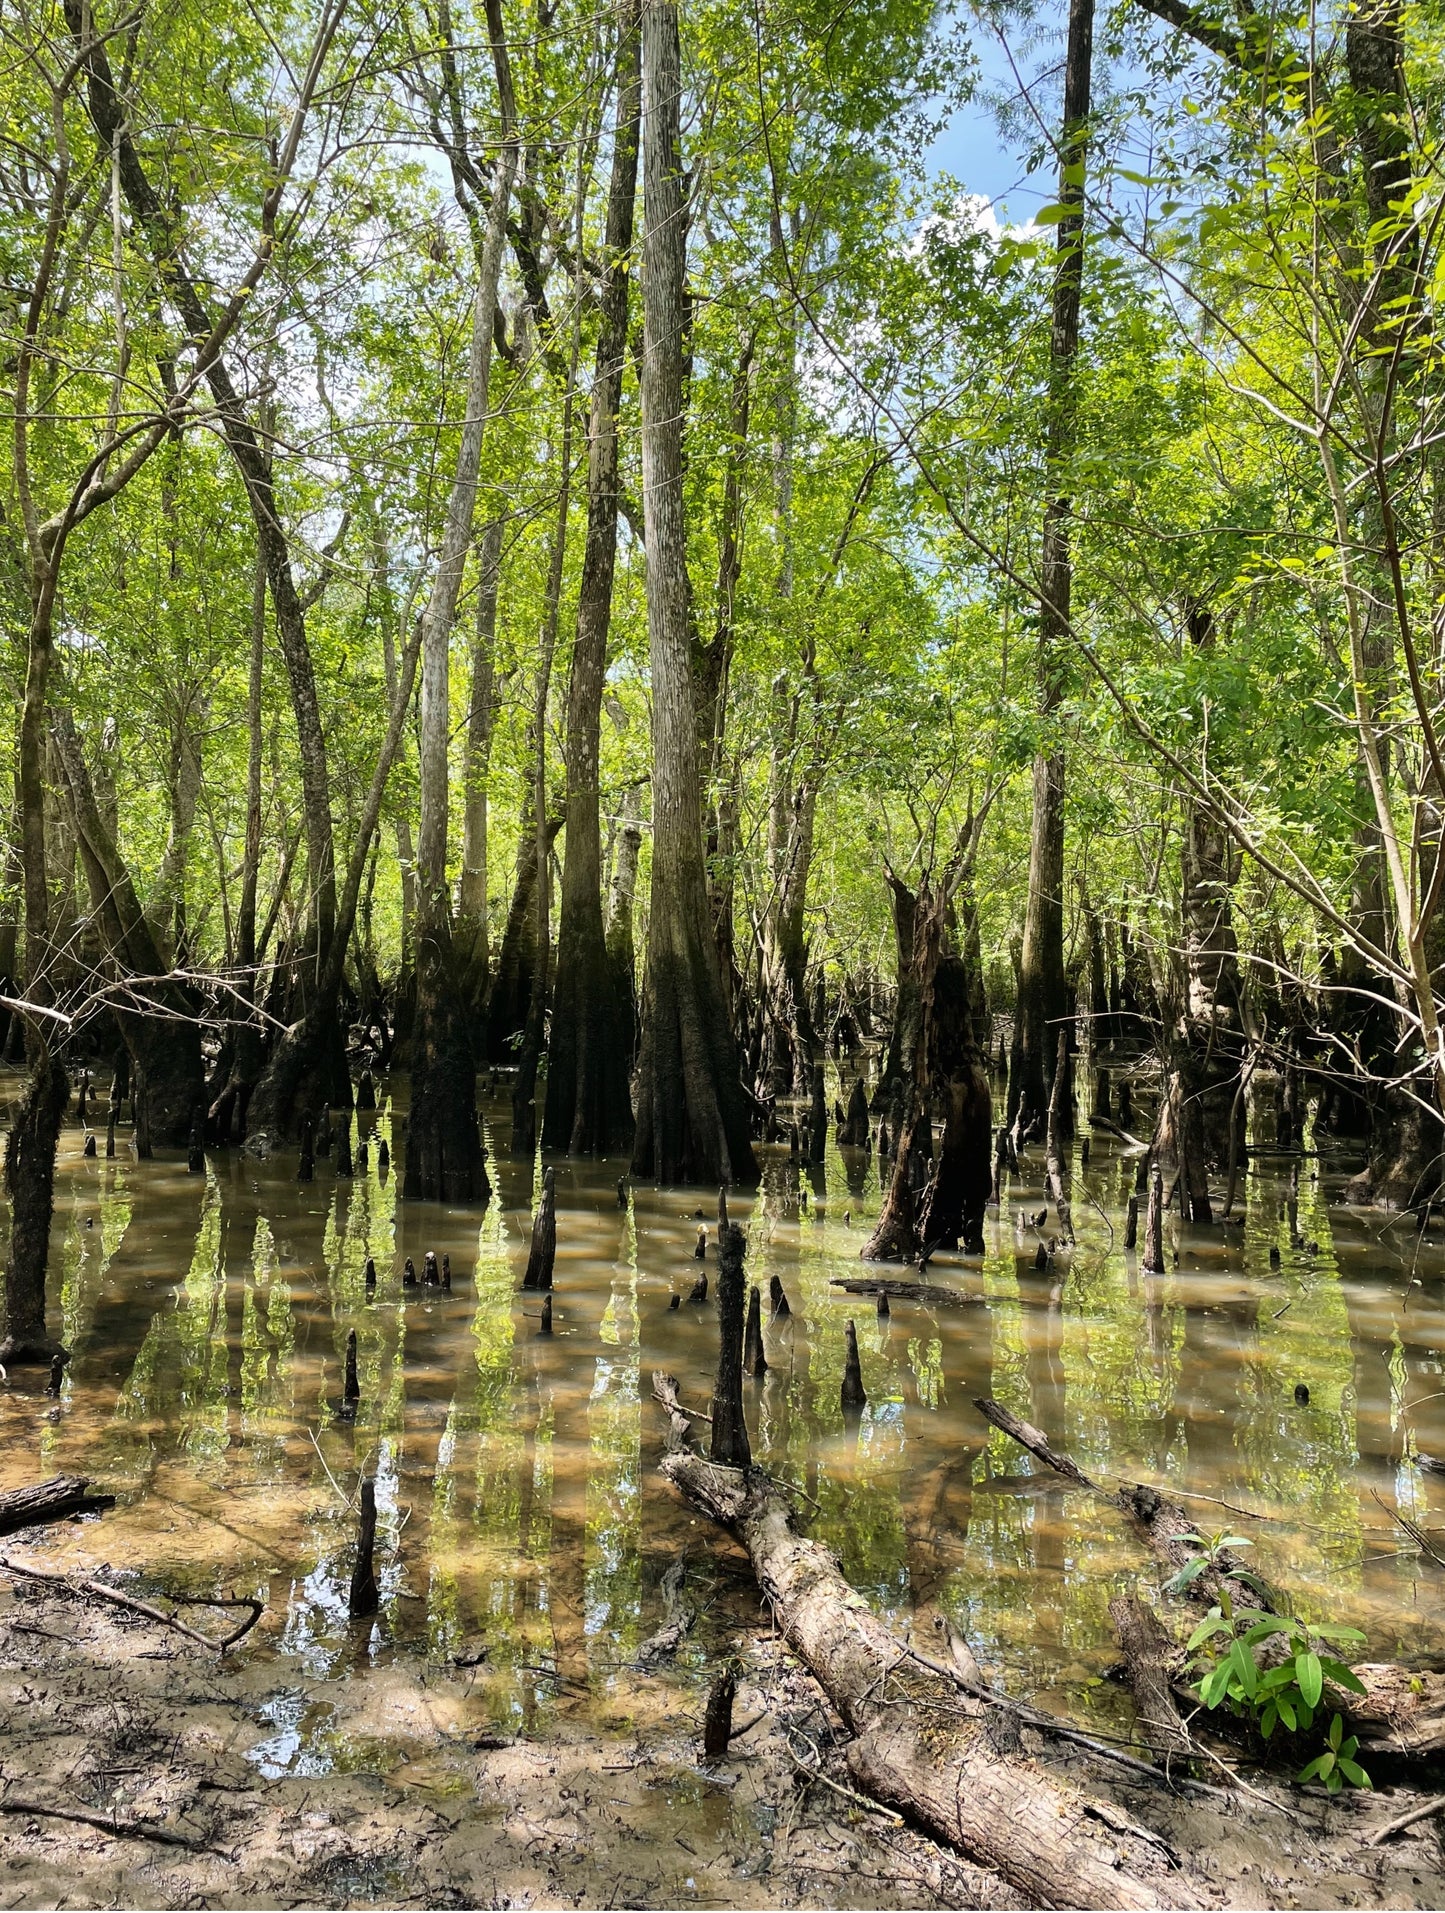 Tupelo trees in the tupelo swamp.